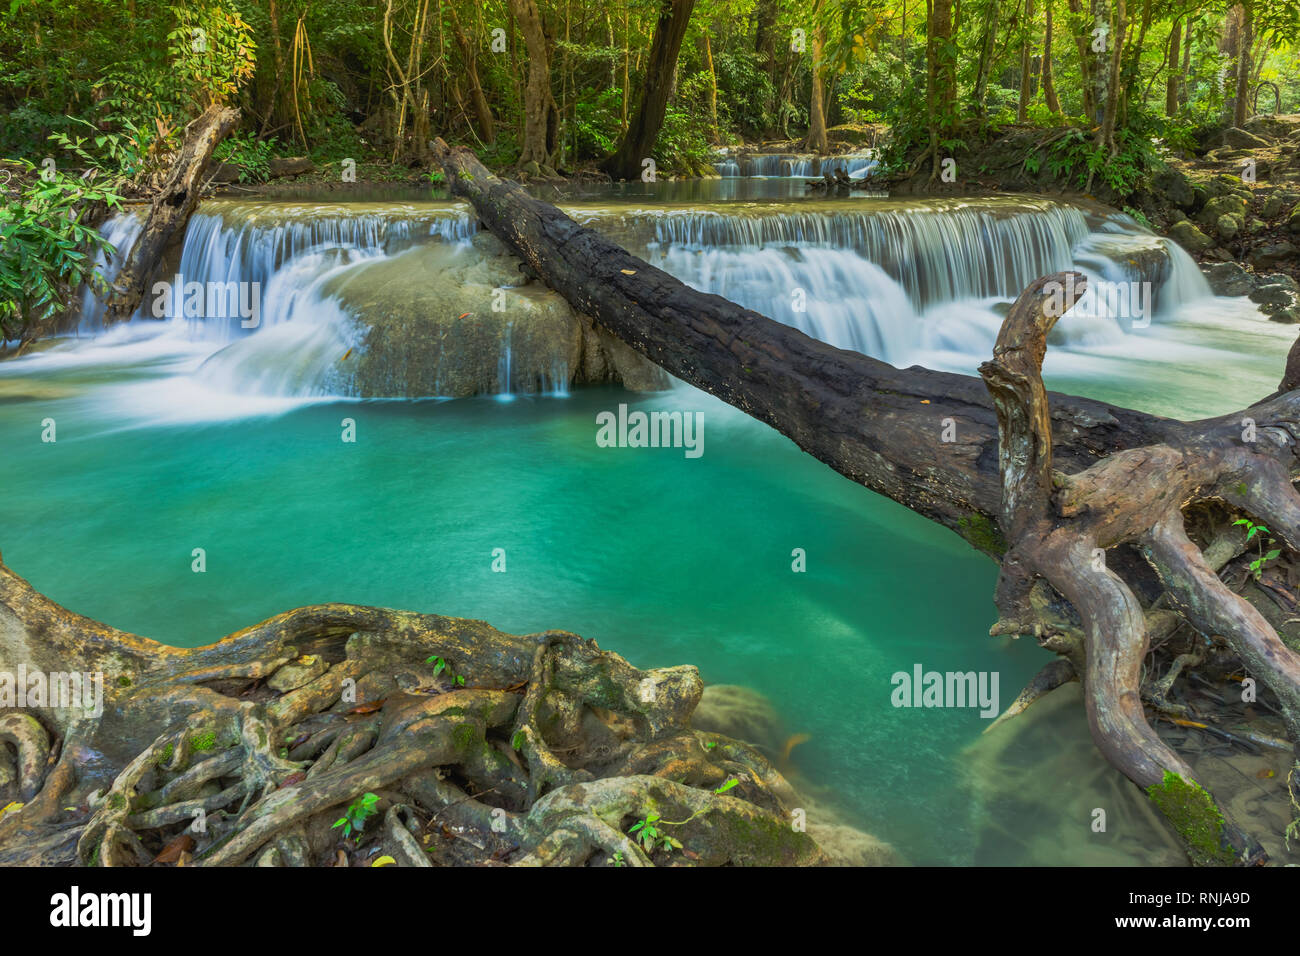 Beautiful Scenery Of Erawan Waterfall In Kanchanaburi Thailand Images, Photos, Reviews